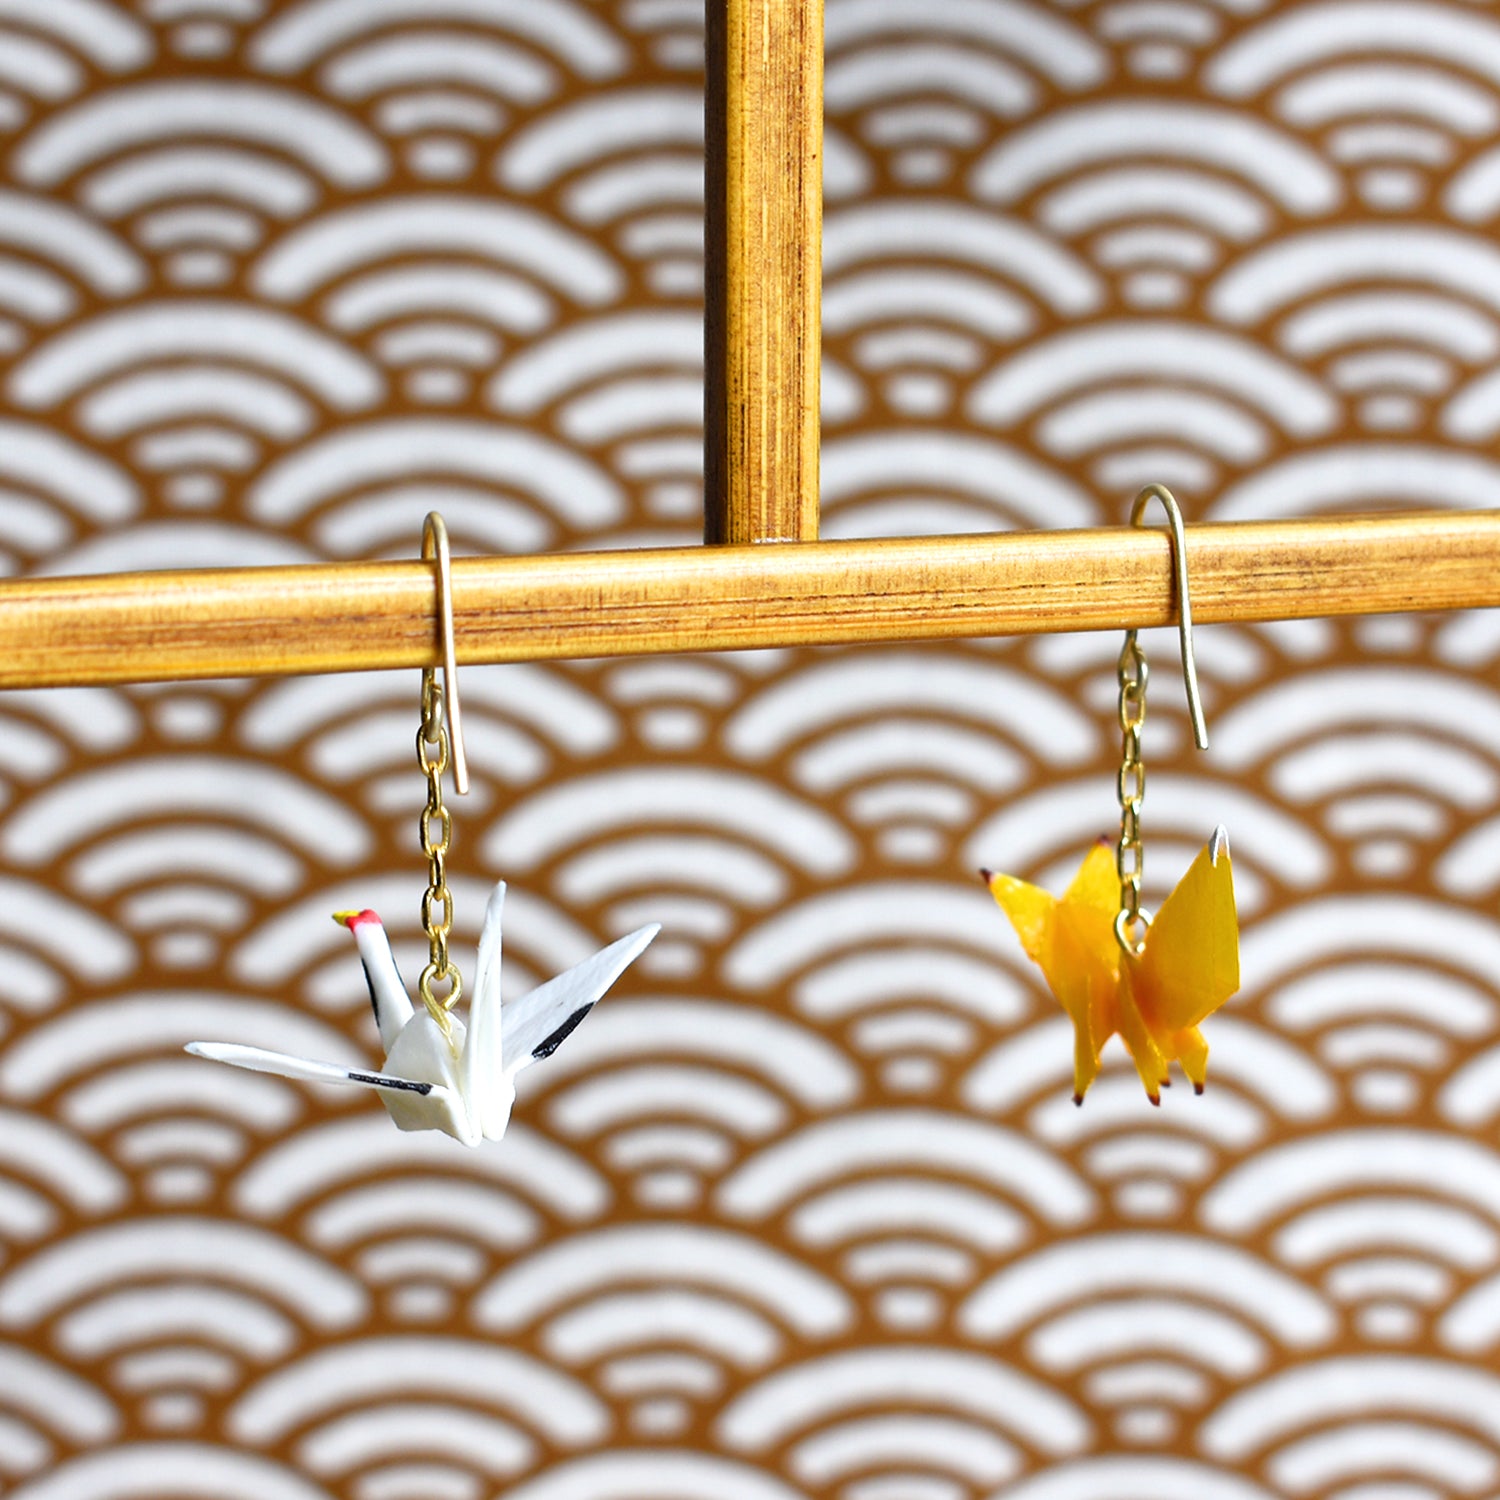 White Crane & Yellow Fox Paper Origami Pierced Earrings